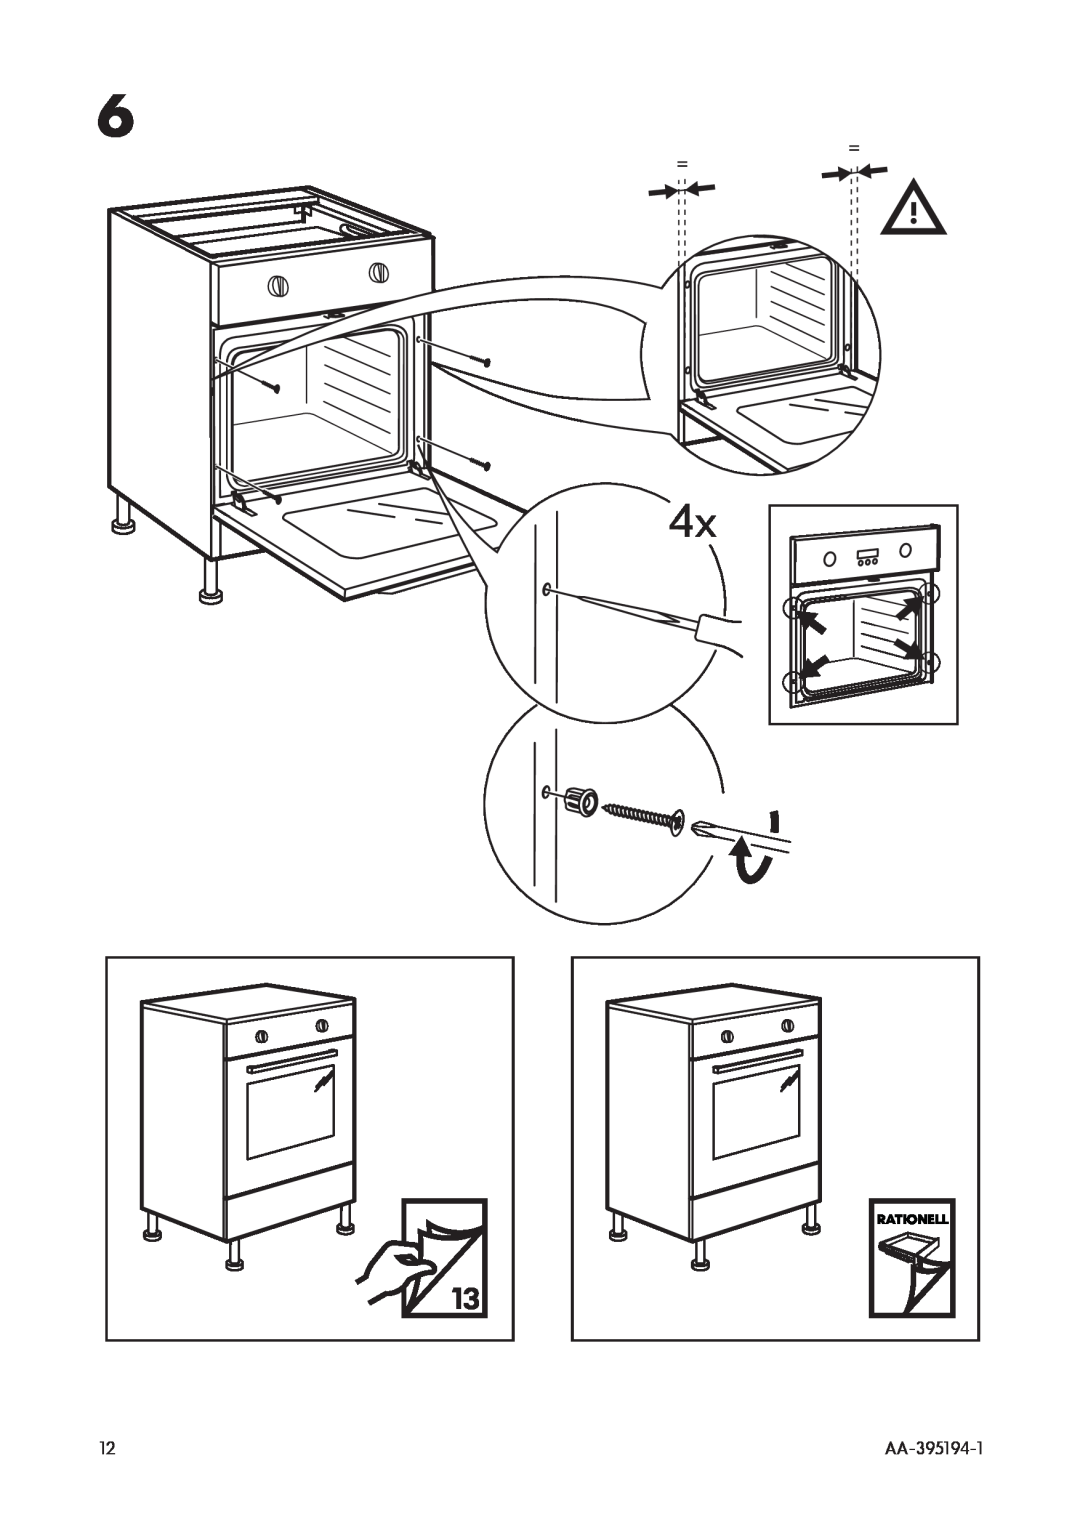 IKEA OV3 manual = =, AA-395194-1, Rationell 